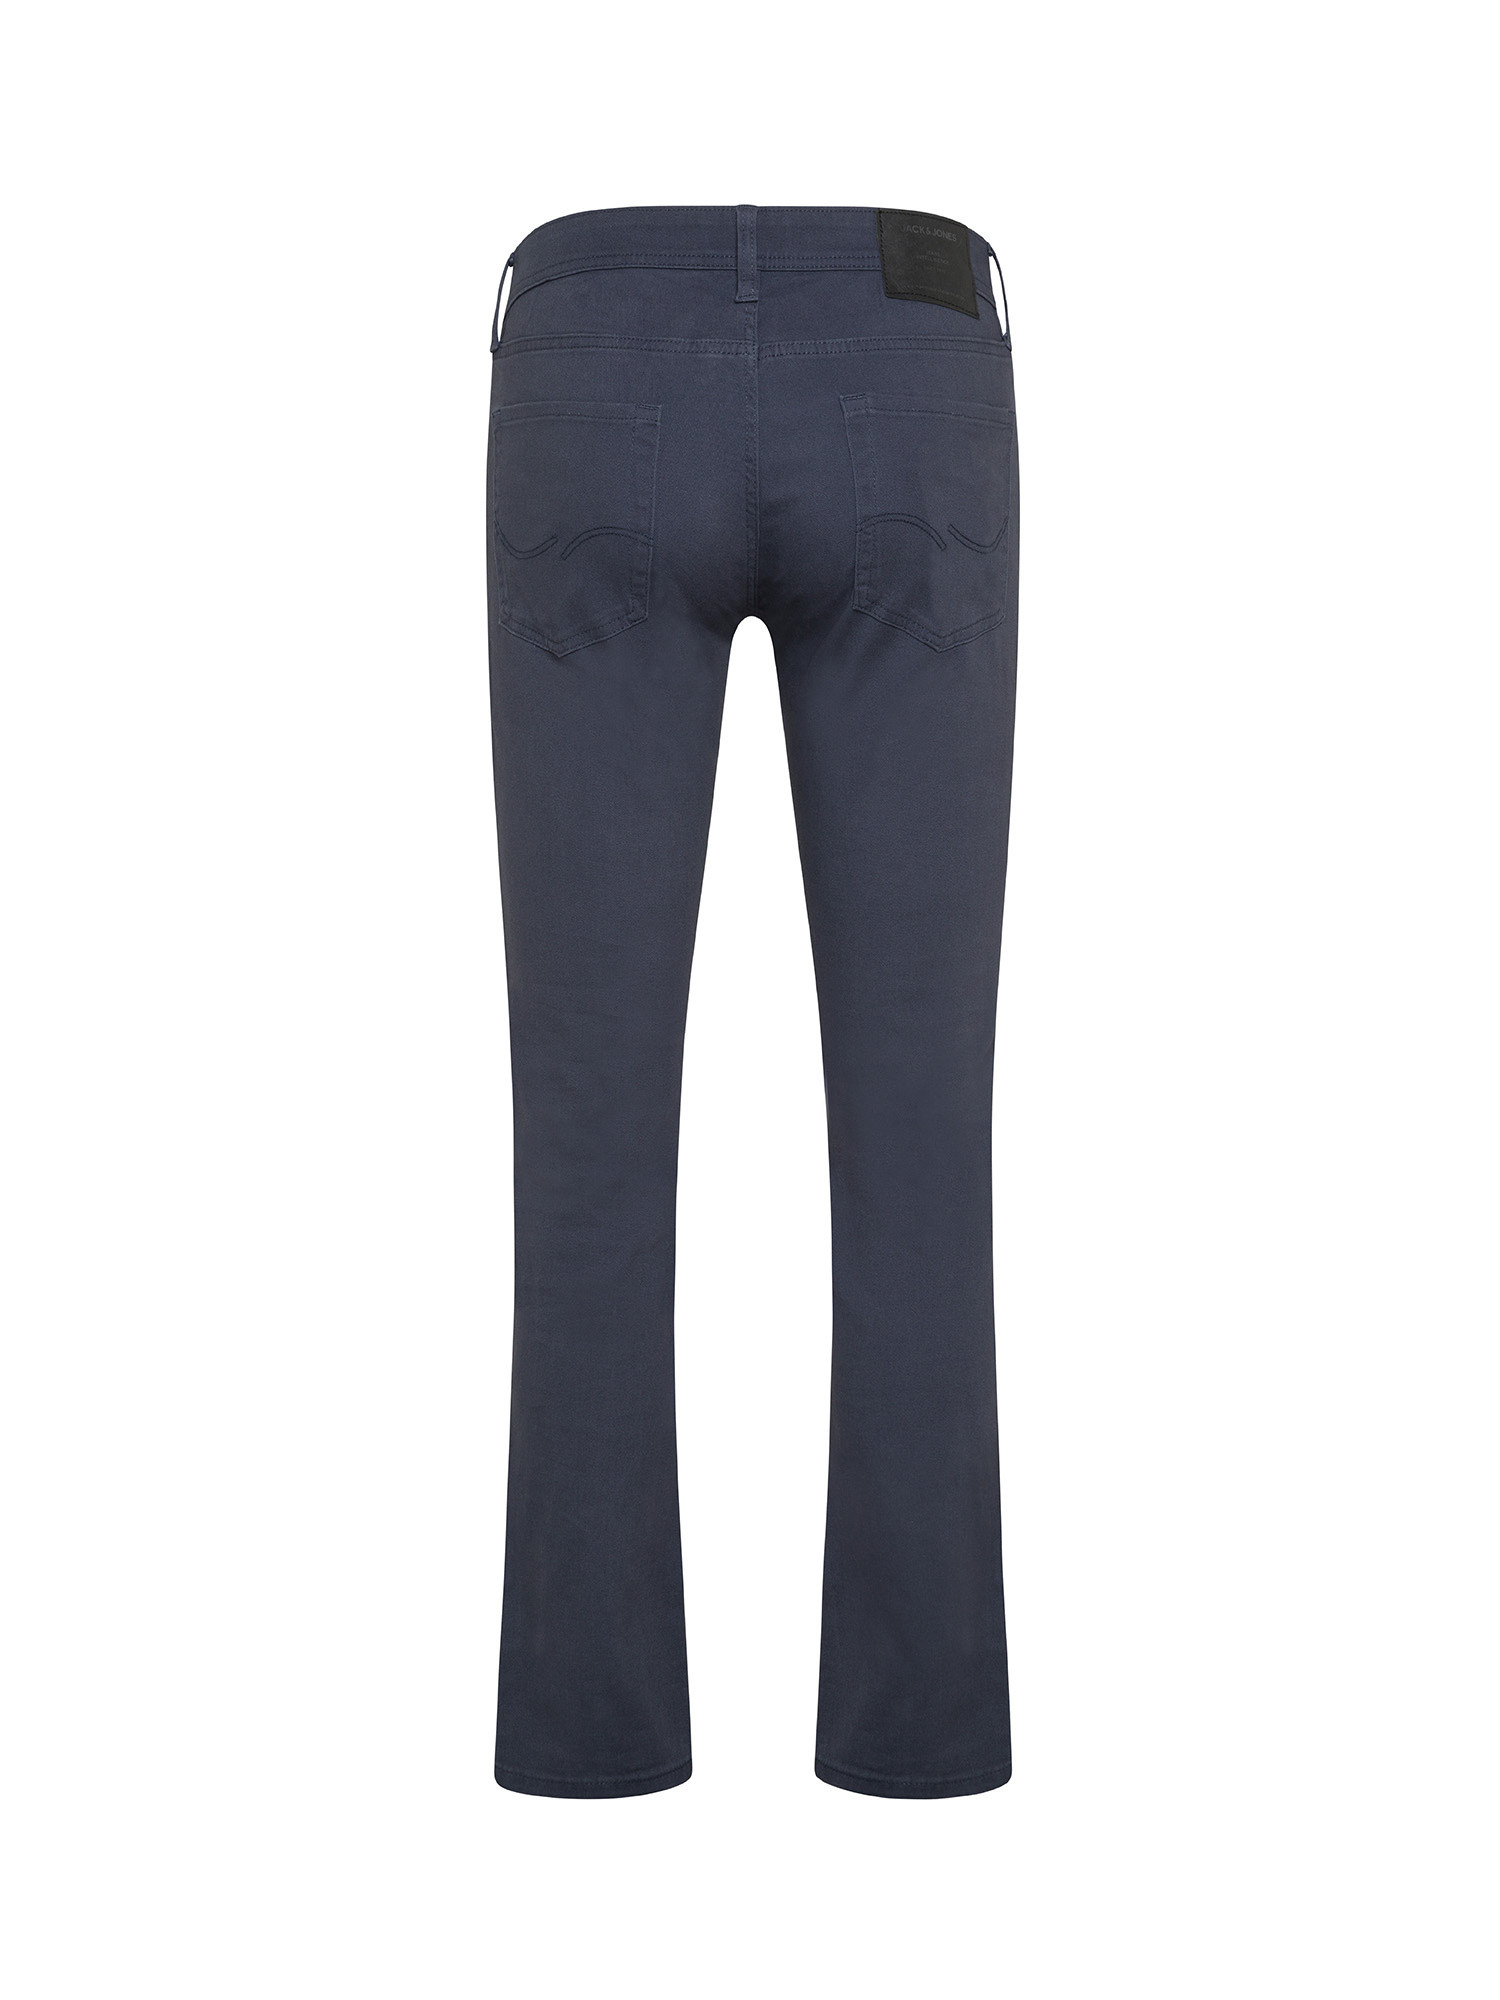 Jack & Jones - Pantaloni slim fit cinque tasche, Blu scuro, large image number 1